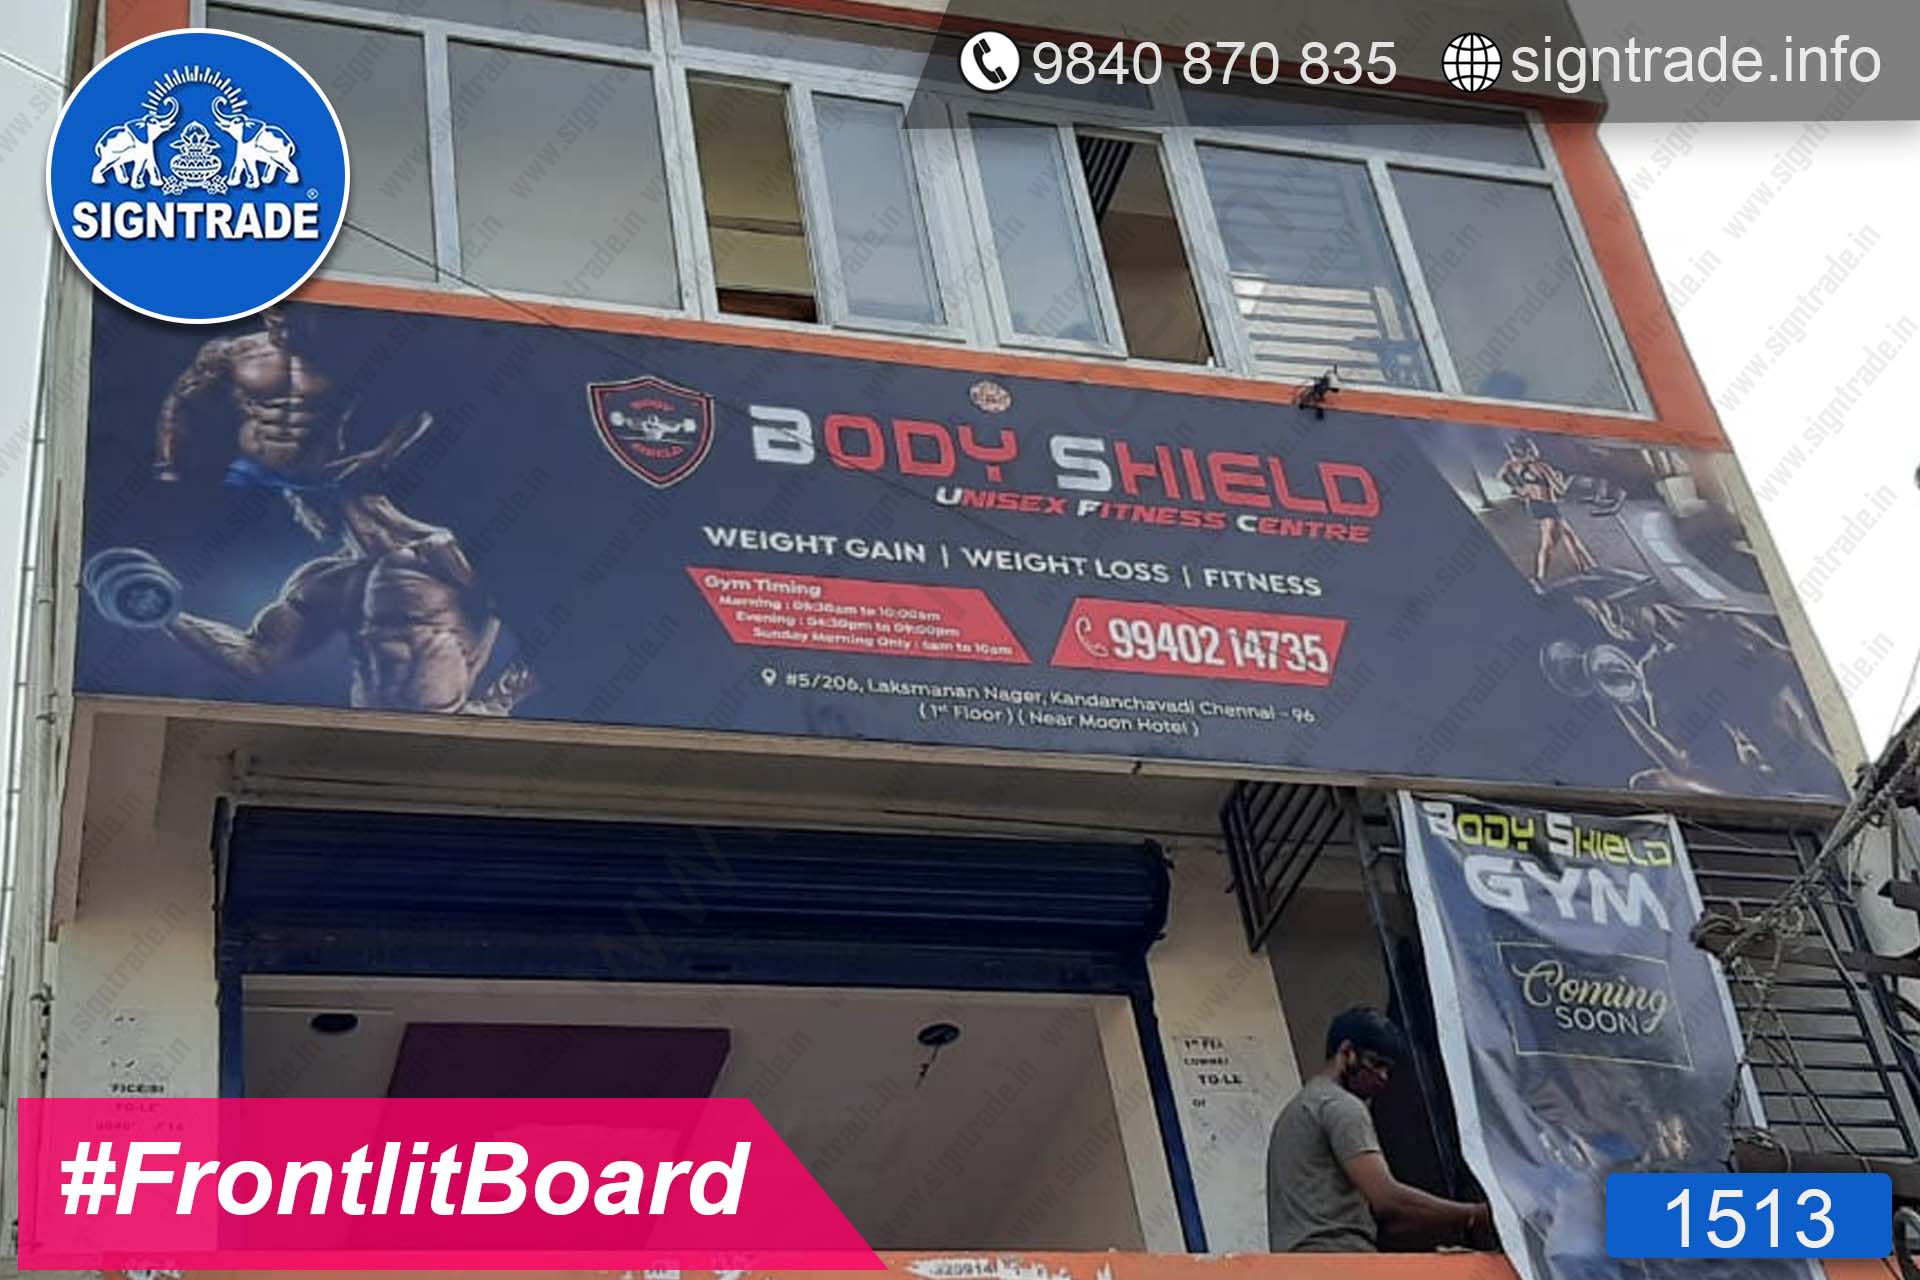 Body Shield Gym, Kandanchavadi, Chennai - SIGNTRADE - Digital Flex Printing Service - Frontlit Flex Board Manufacturers in Chennai